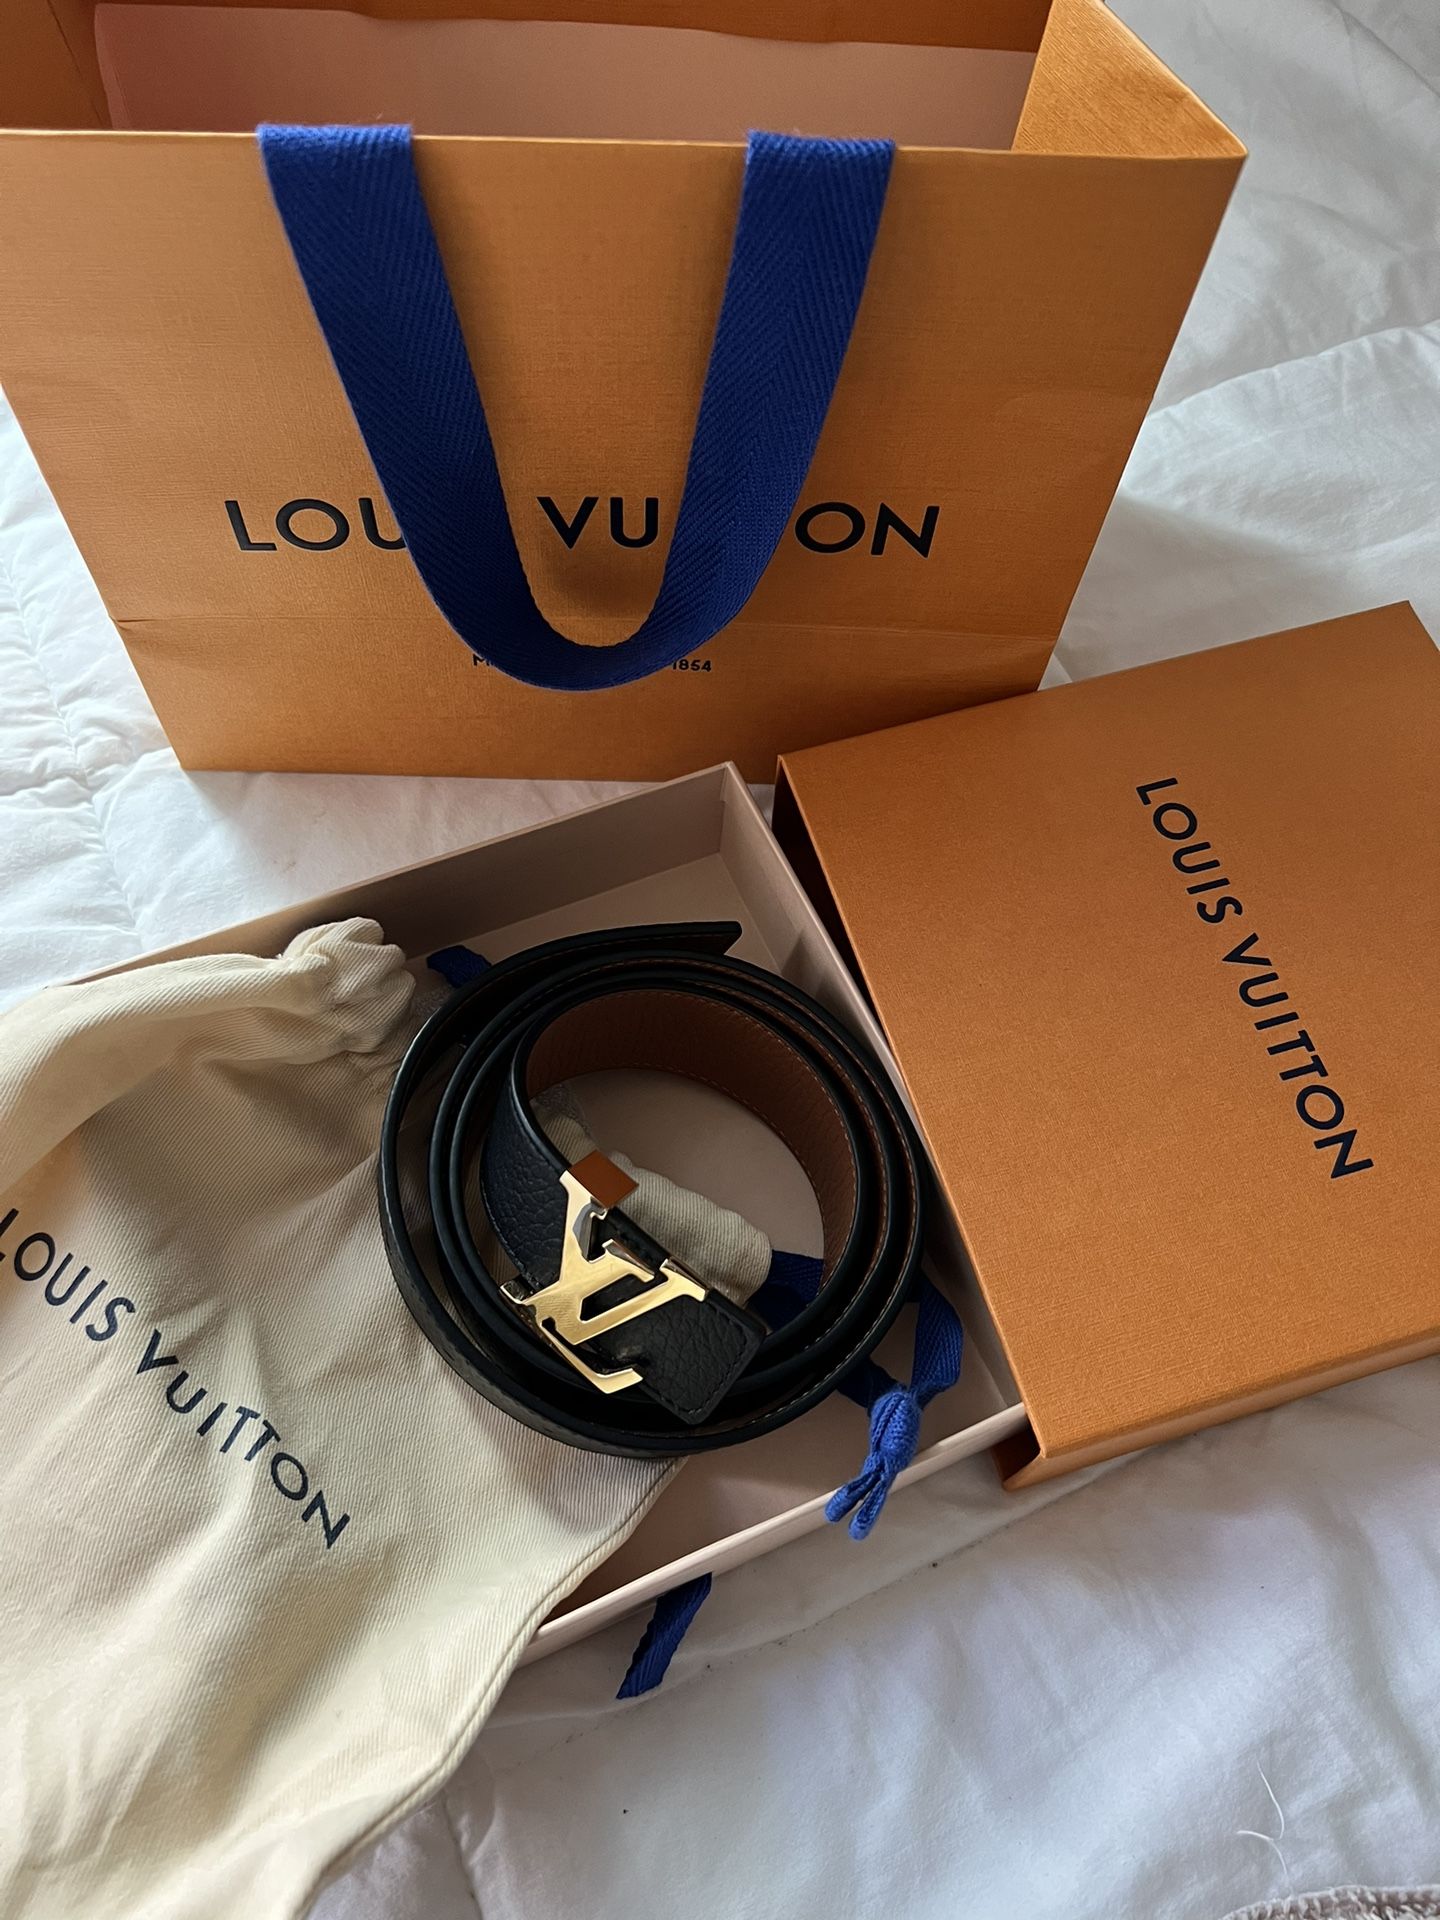 Louis Vuitton Reversible belt for Sale in Costa Mesa, CA - OfferUp